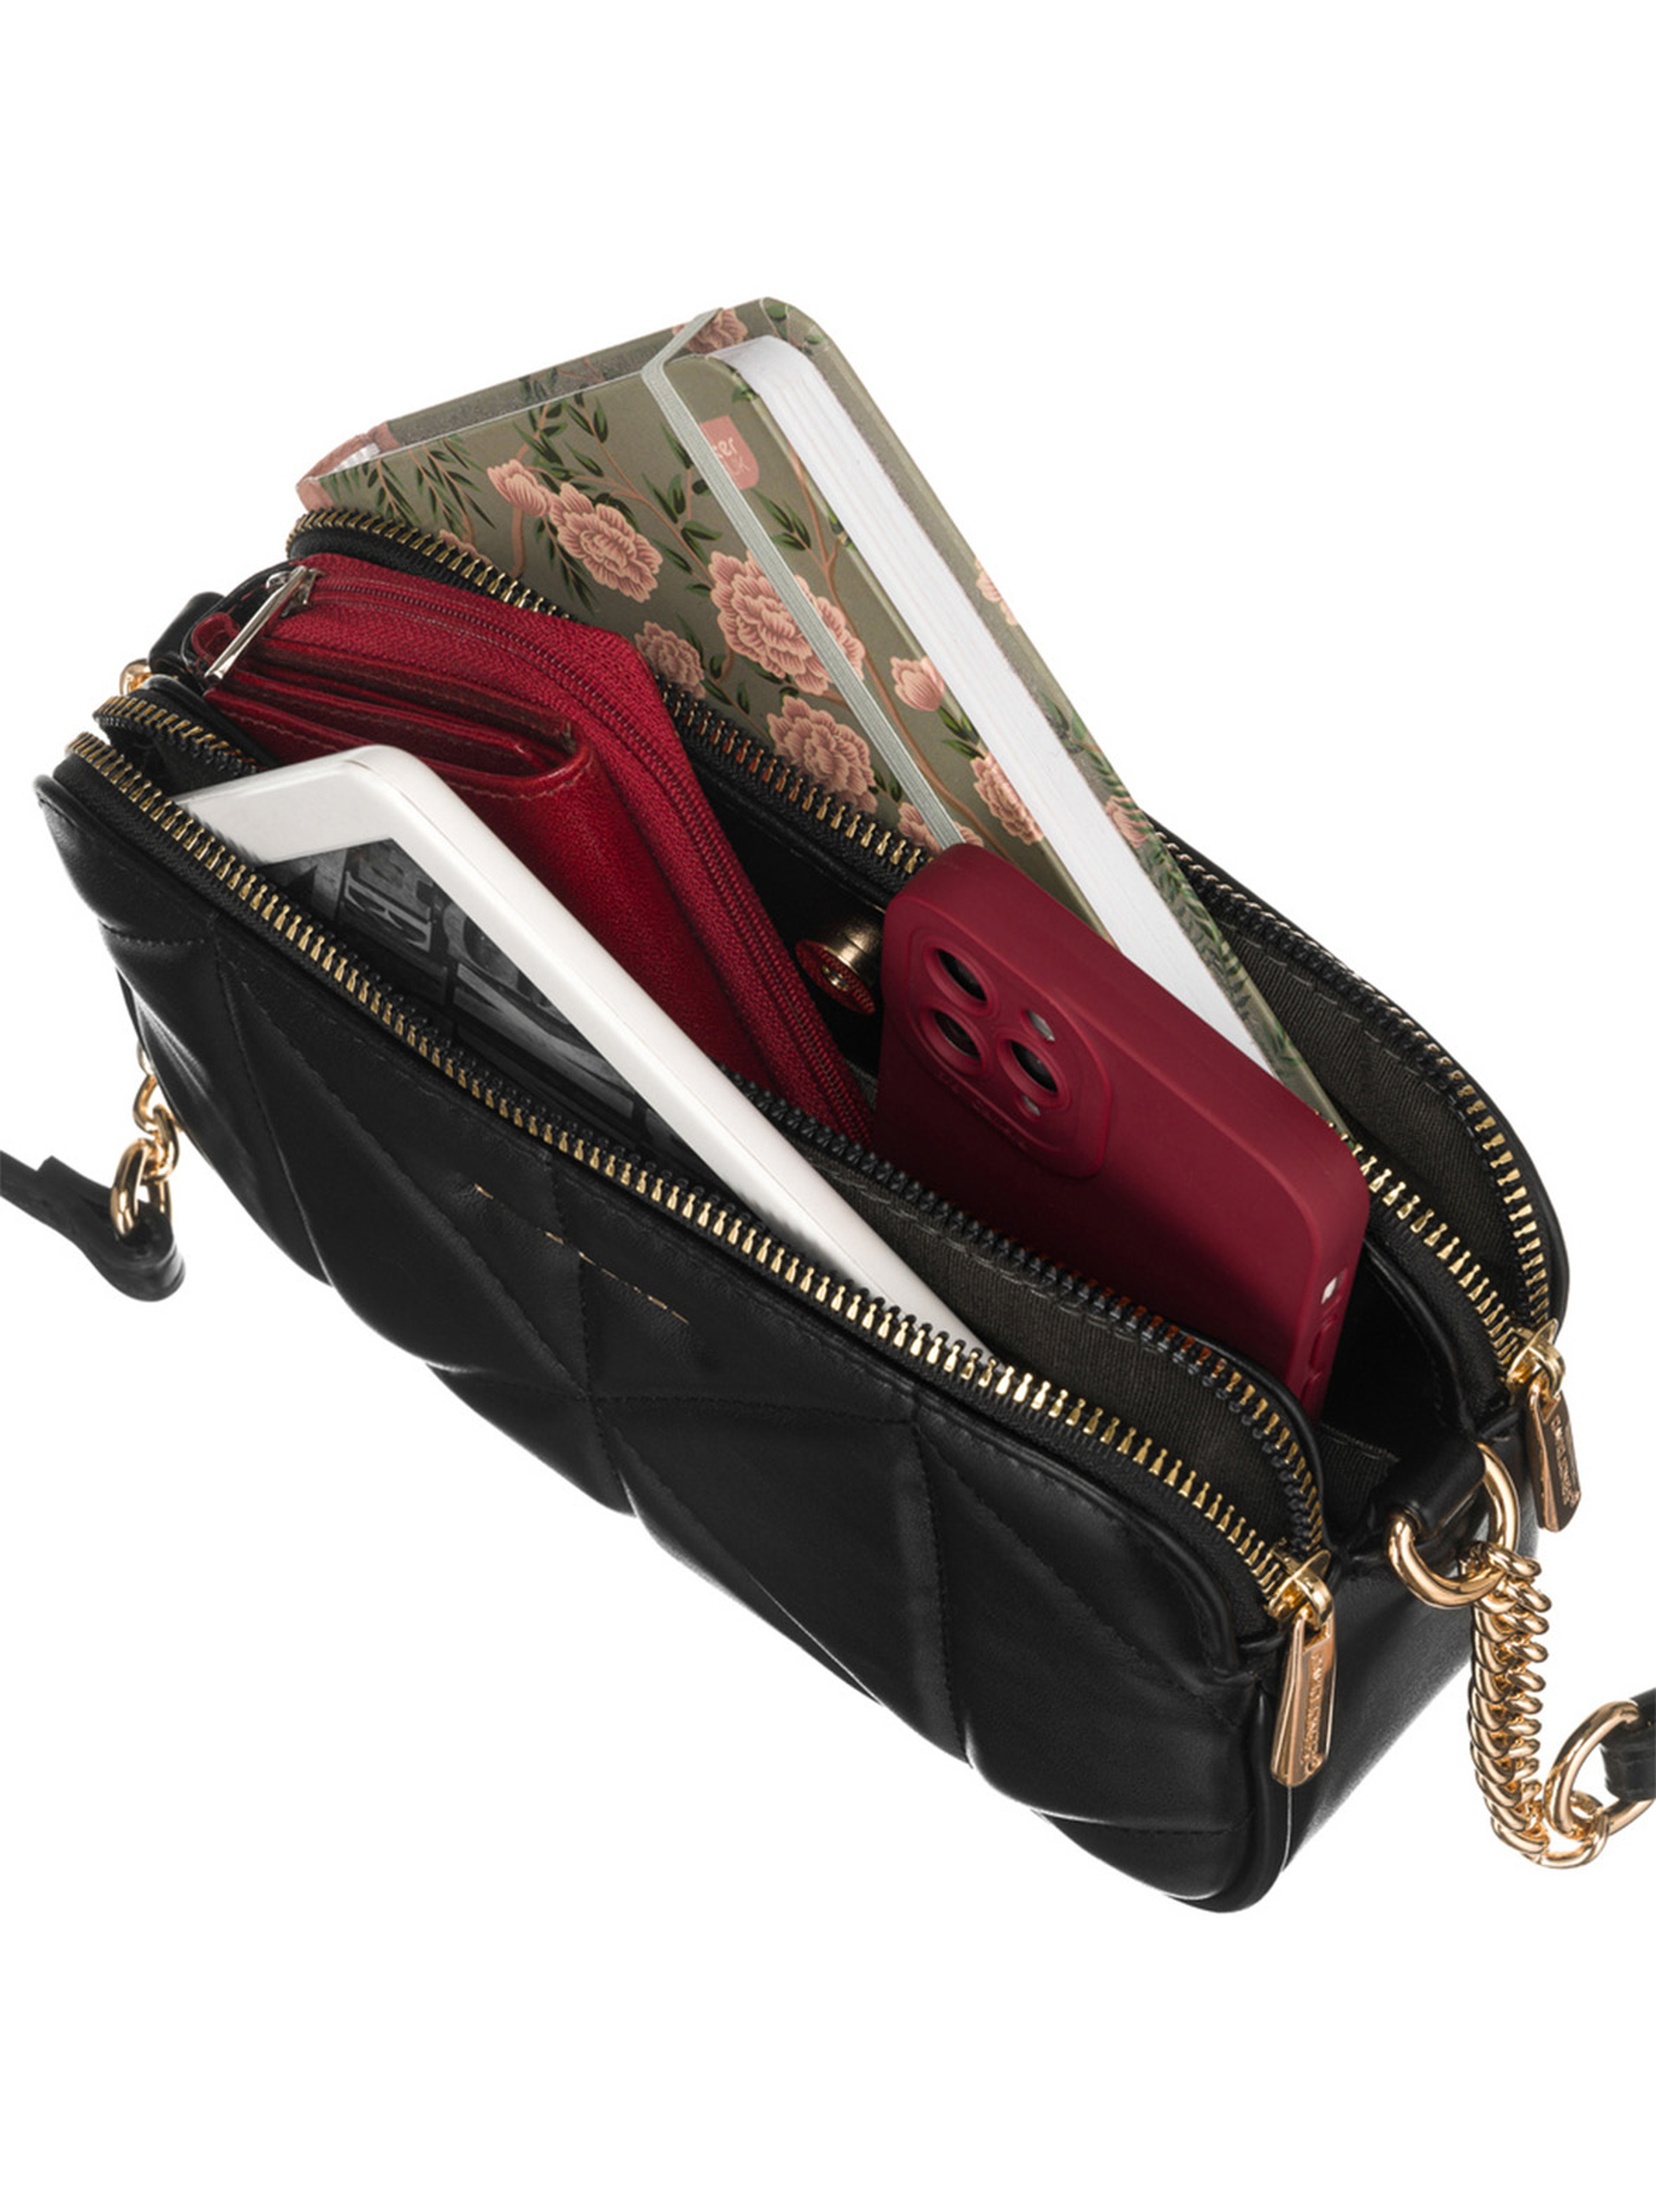 Elegancka, pikowana torebka damska ze skóry ekologicznej - David Jones - czarna